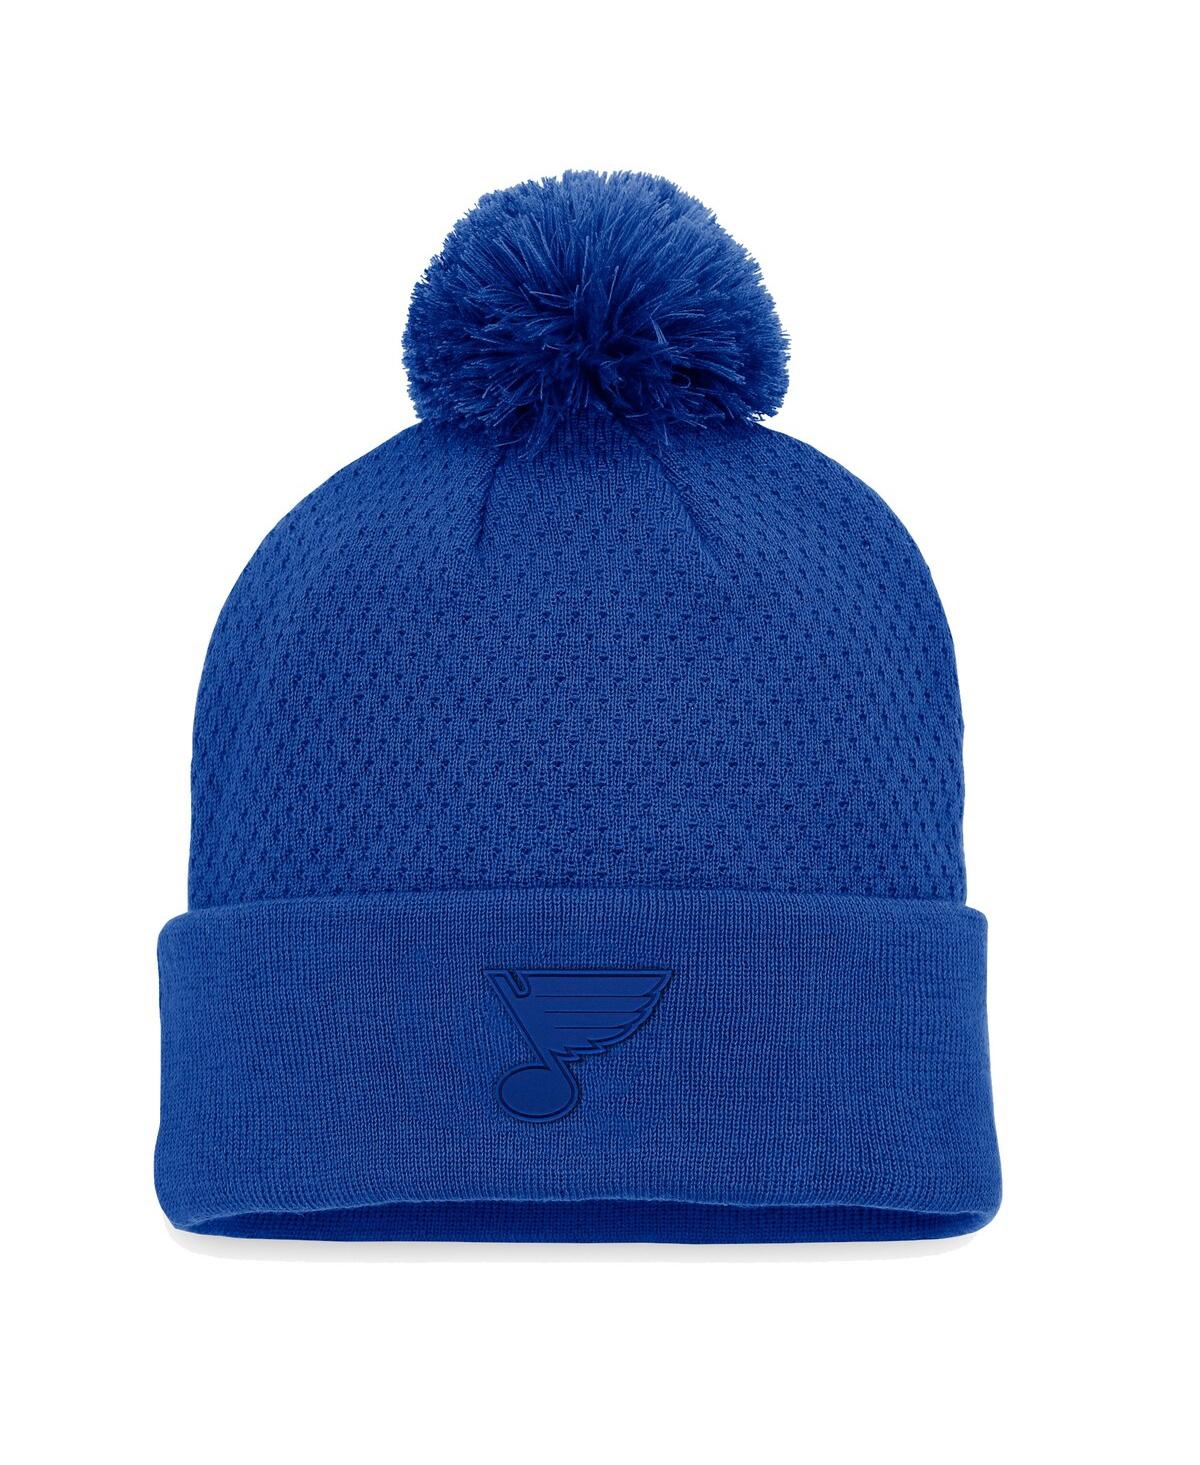 Authentic NHL Headwear Boston Bruins Winter Classic Cuffed Pom Knit Hat -  Macy's